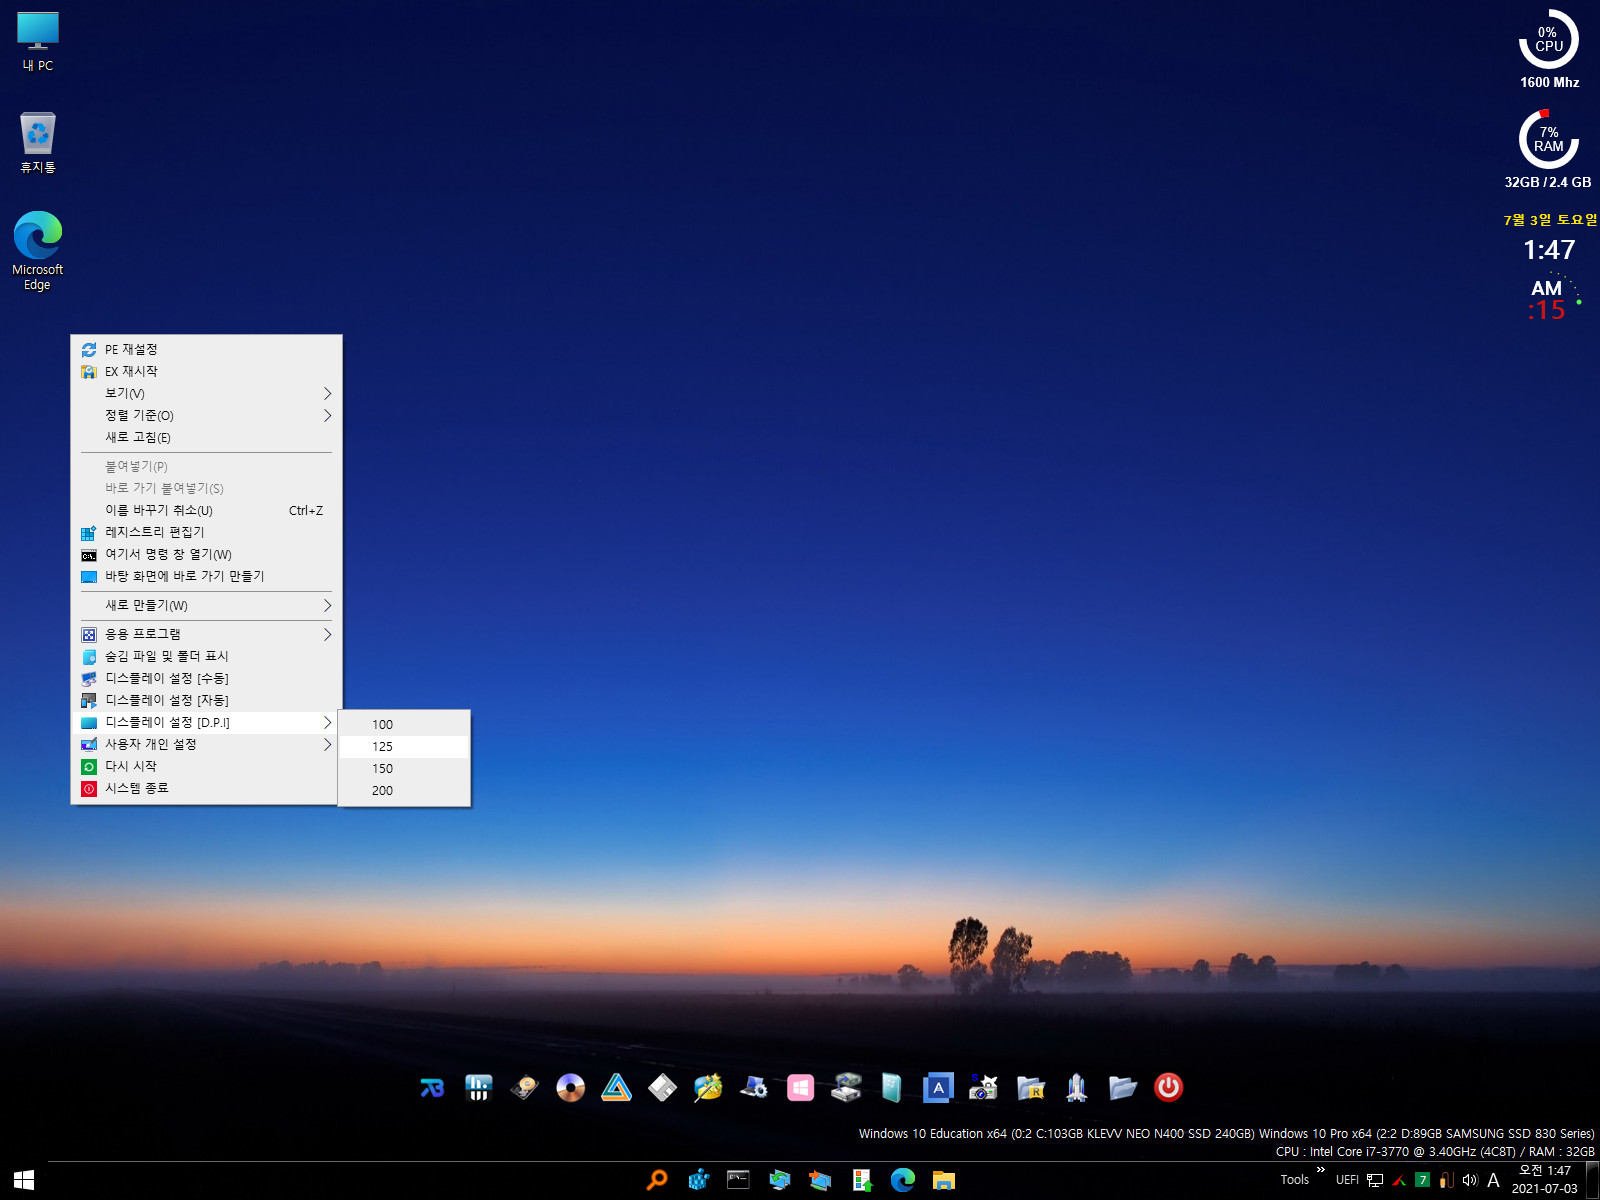 DesktopOK x64 11.06 instal